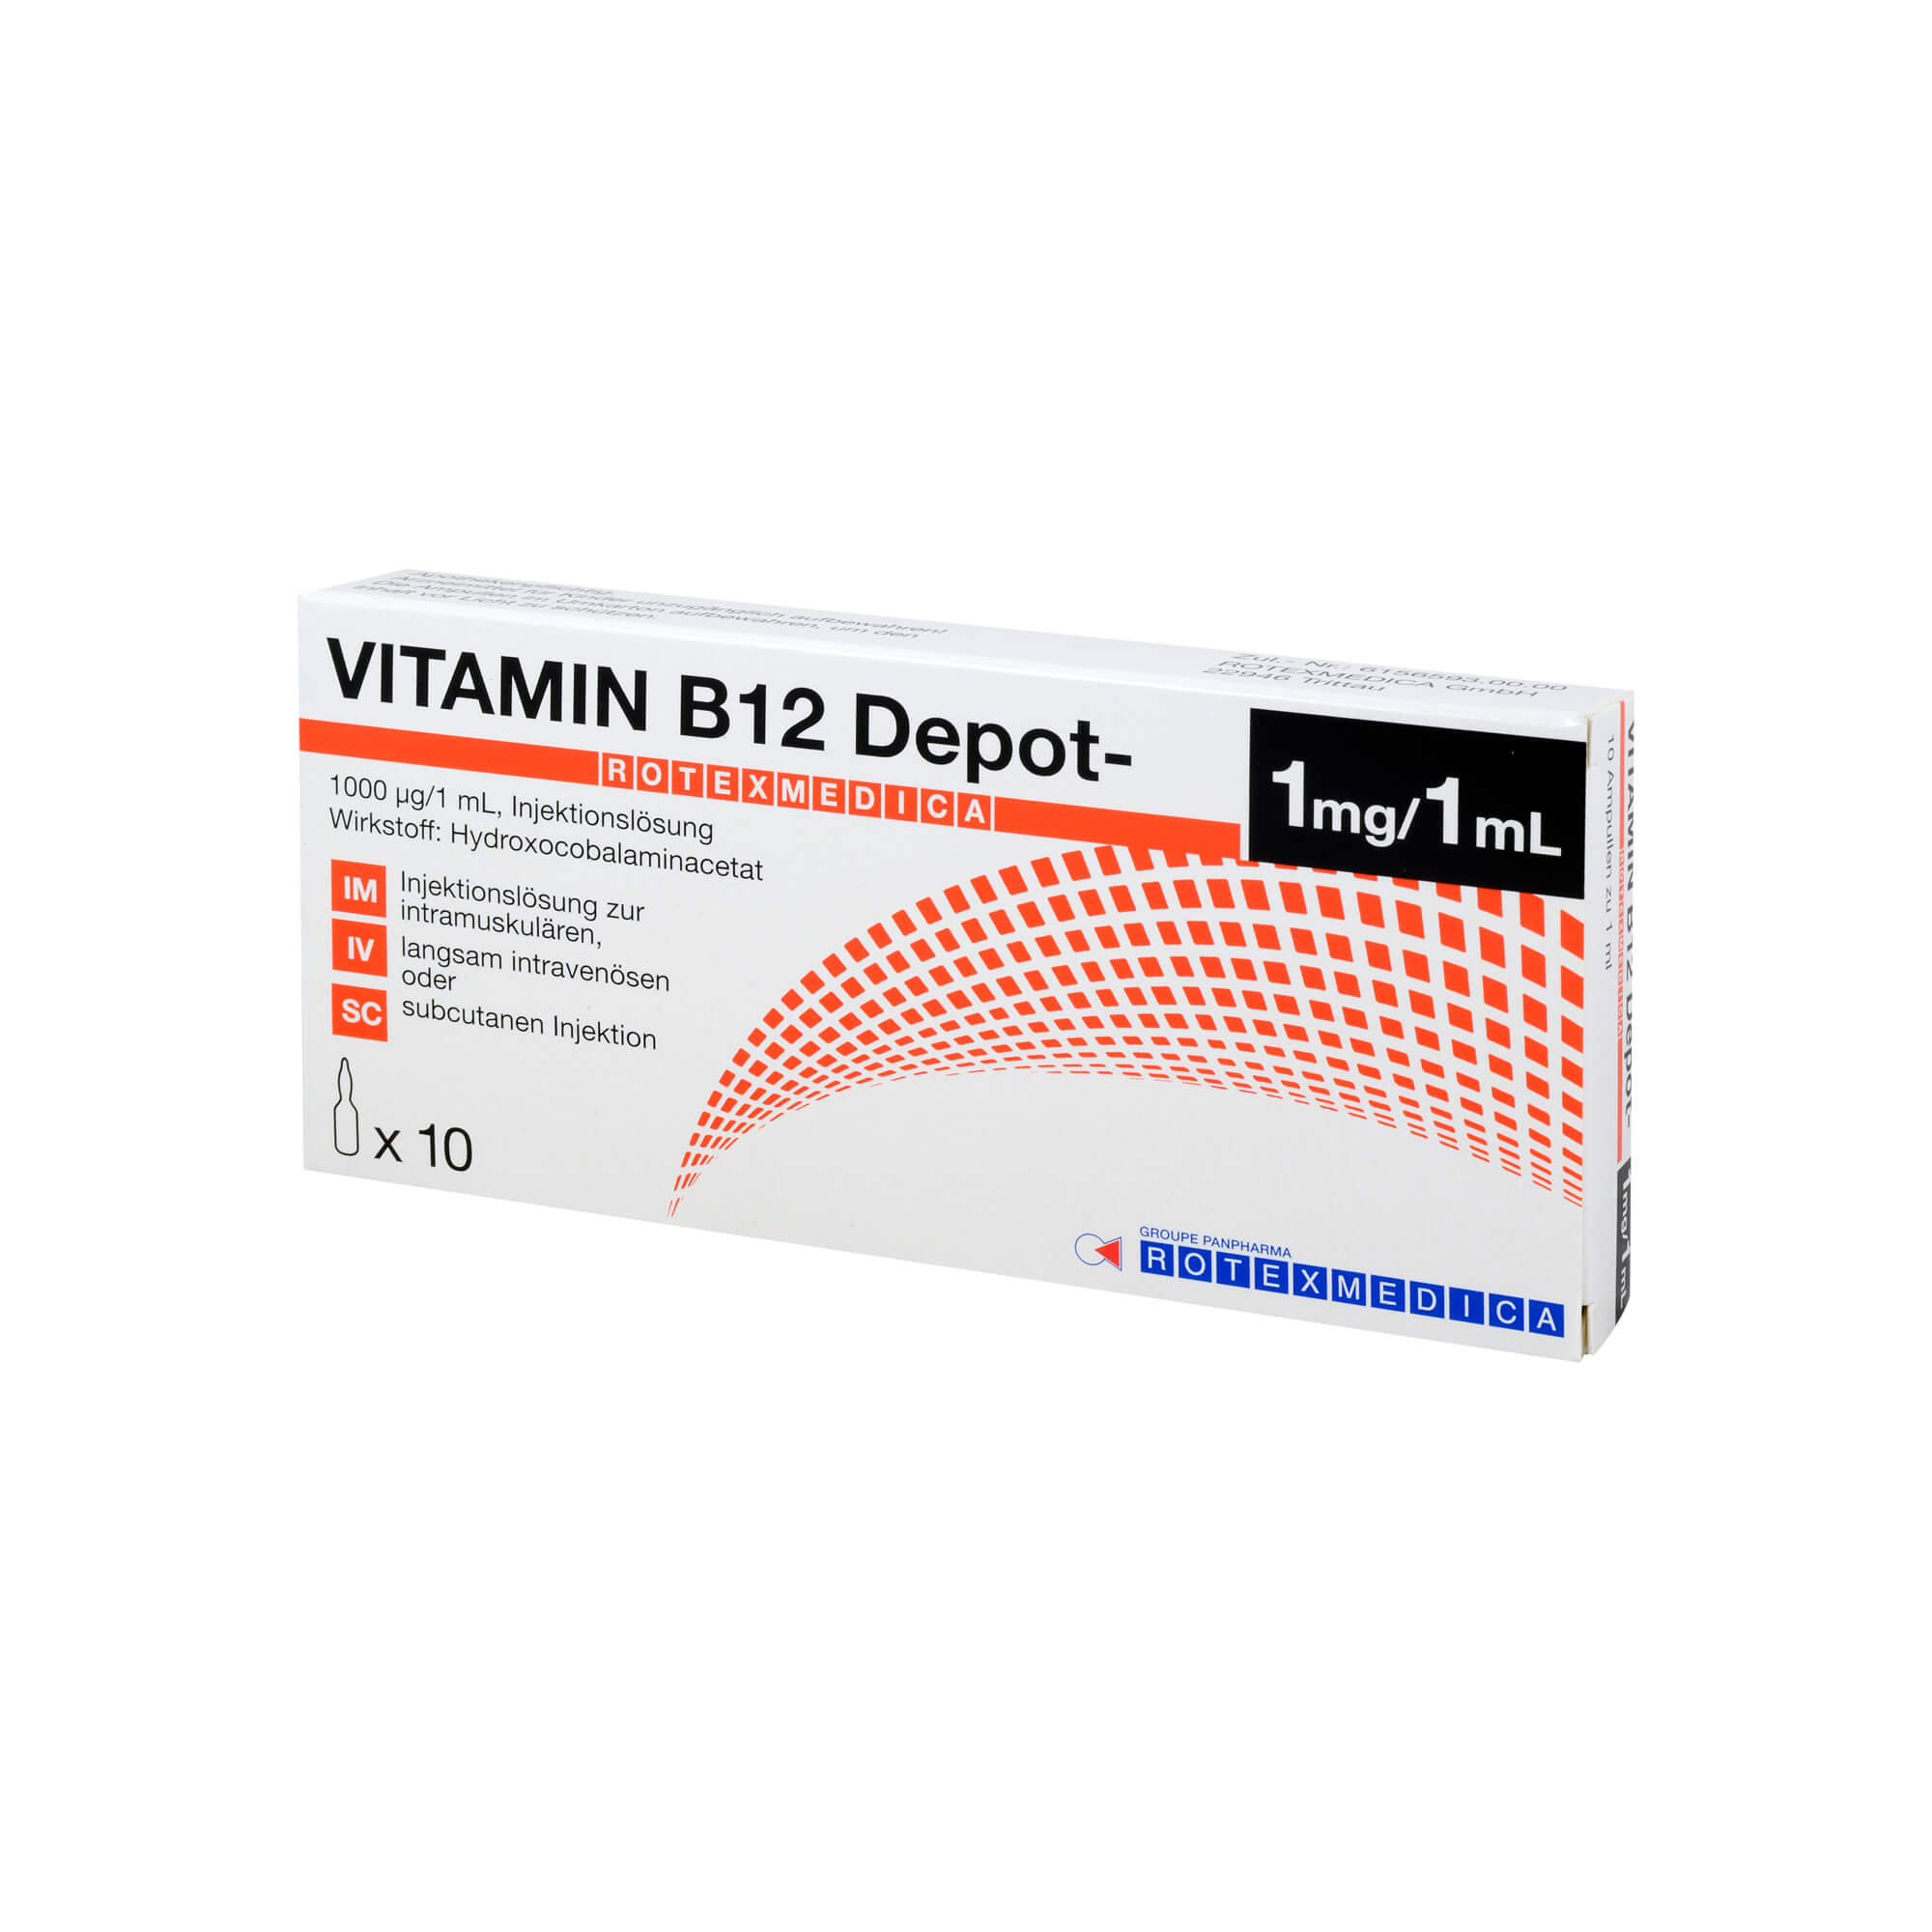 Bei Vitamin B12-Mangel, der ernährungsmäßig nicht behoben werden kann.